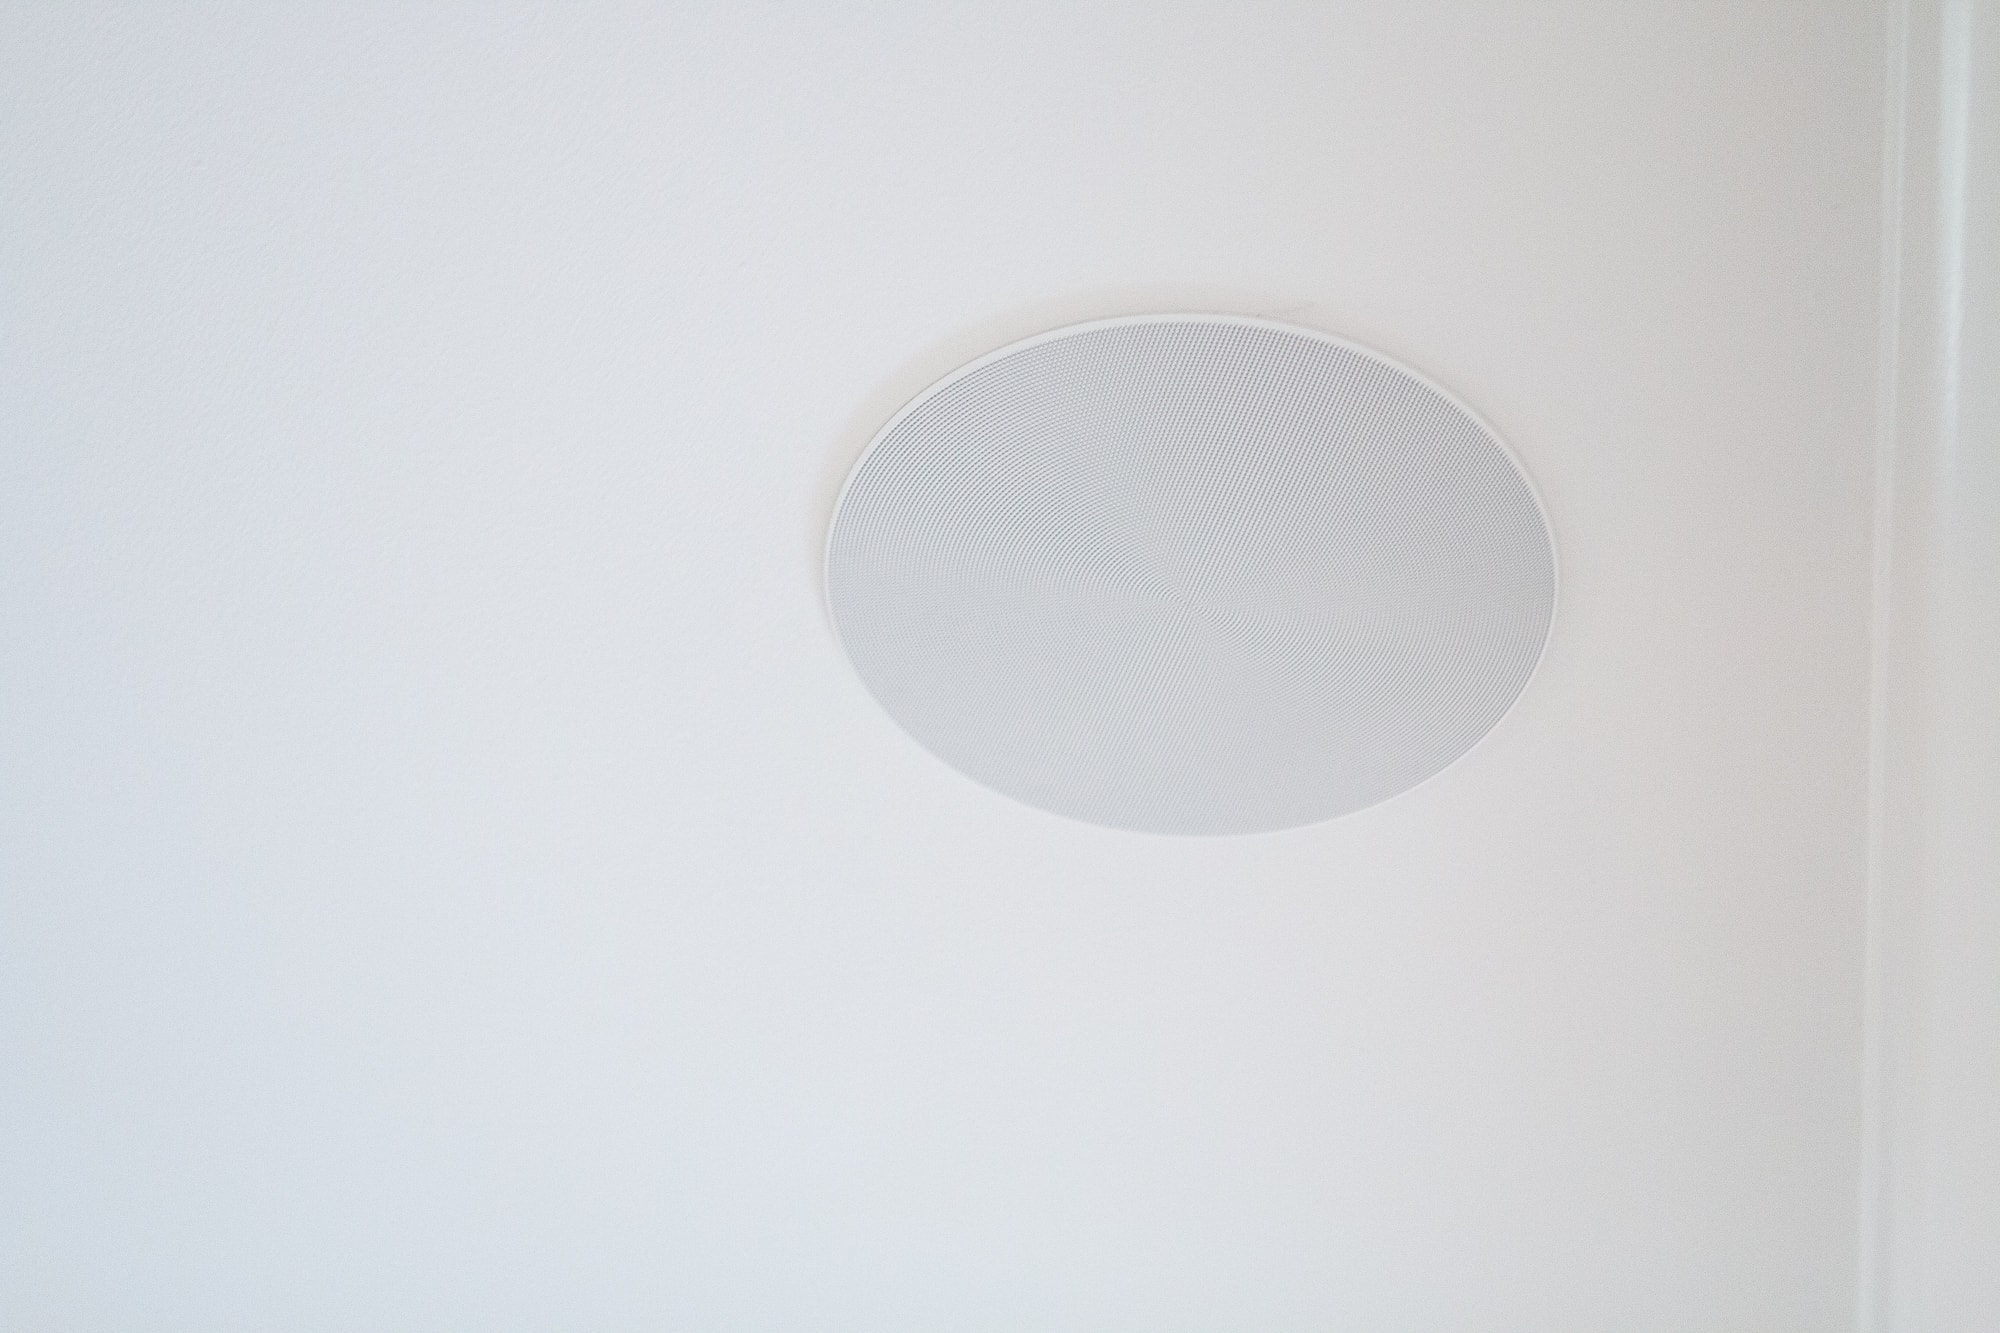 Sonos speakers in the ceiling